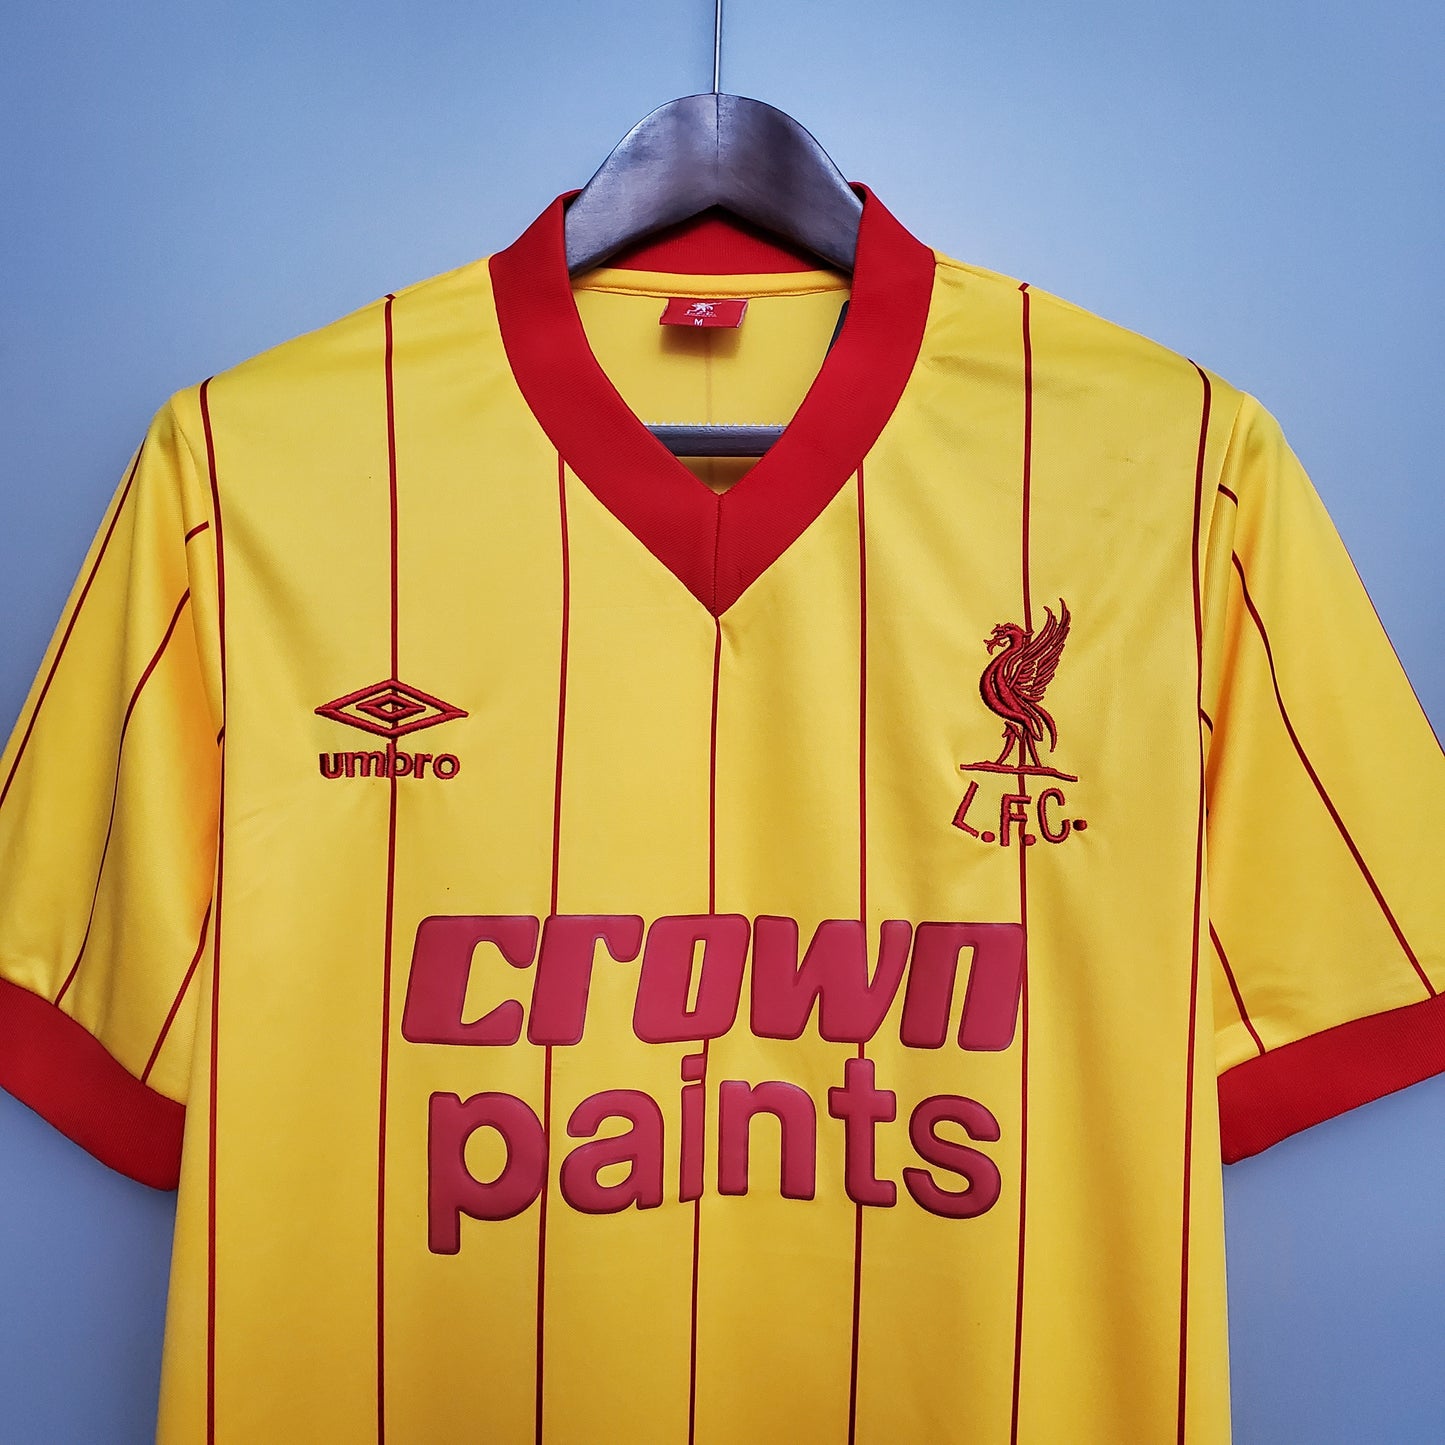 1984 Liverpool Away Shirt